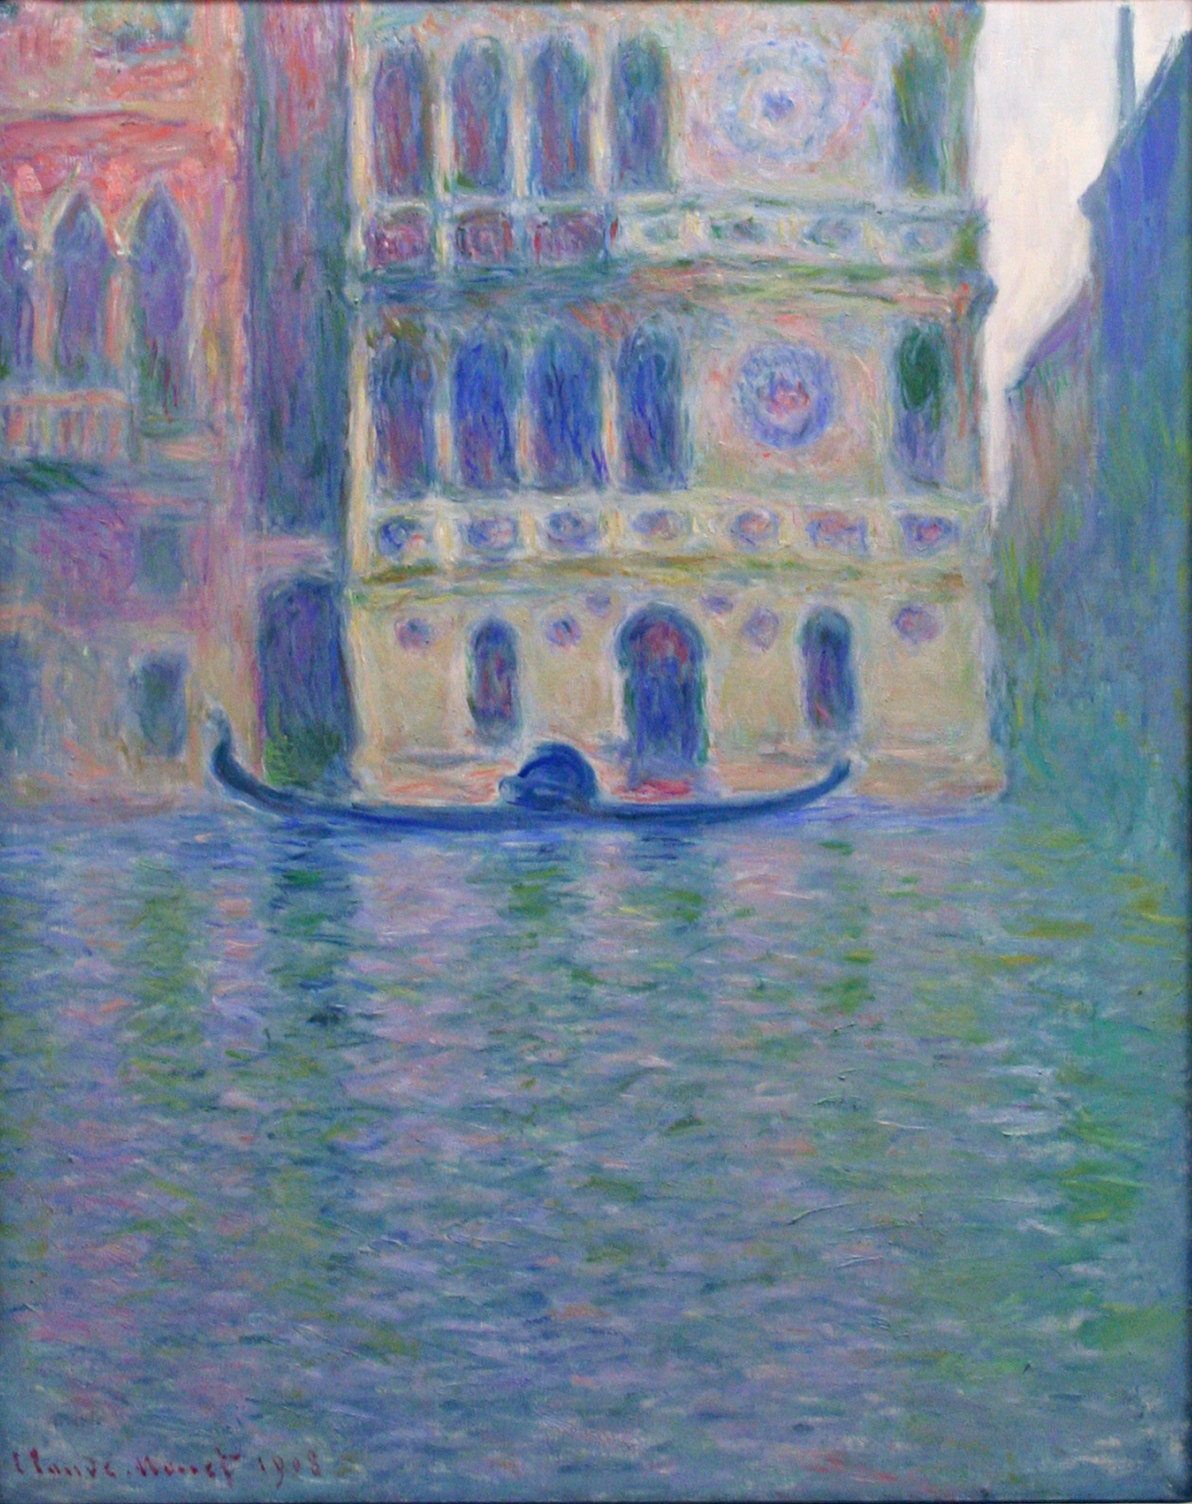 Claude+Monet-1840-1926 (560).jpg